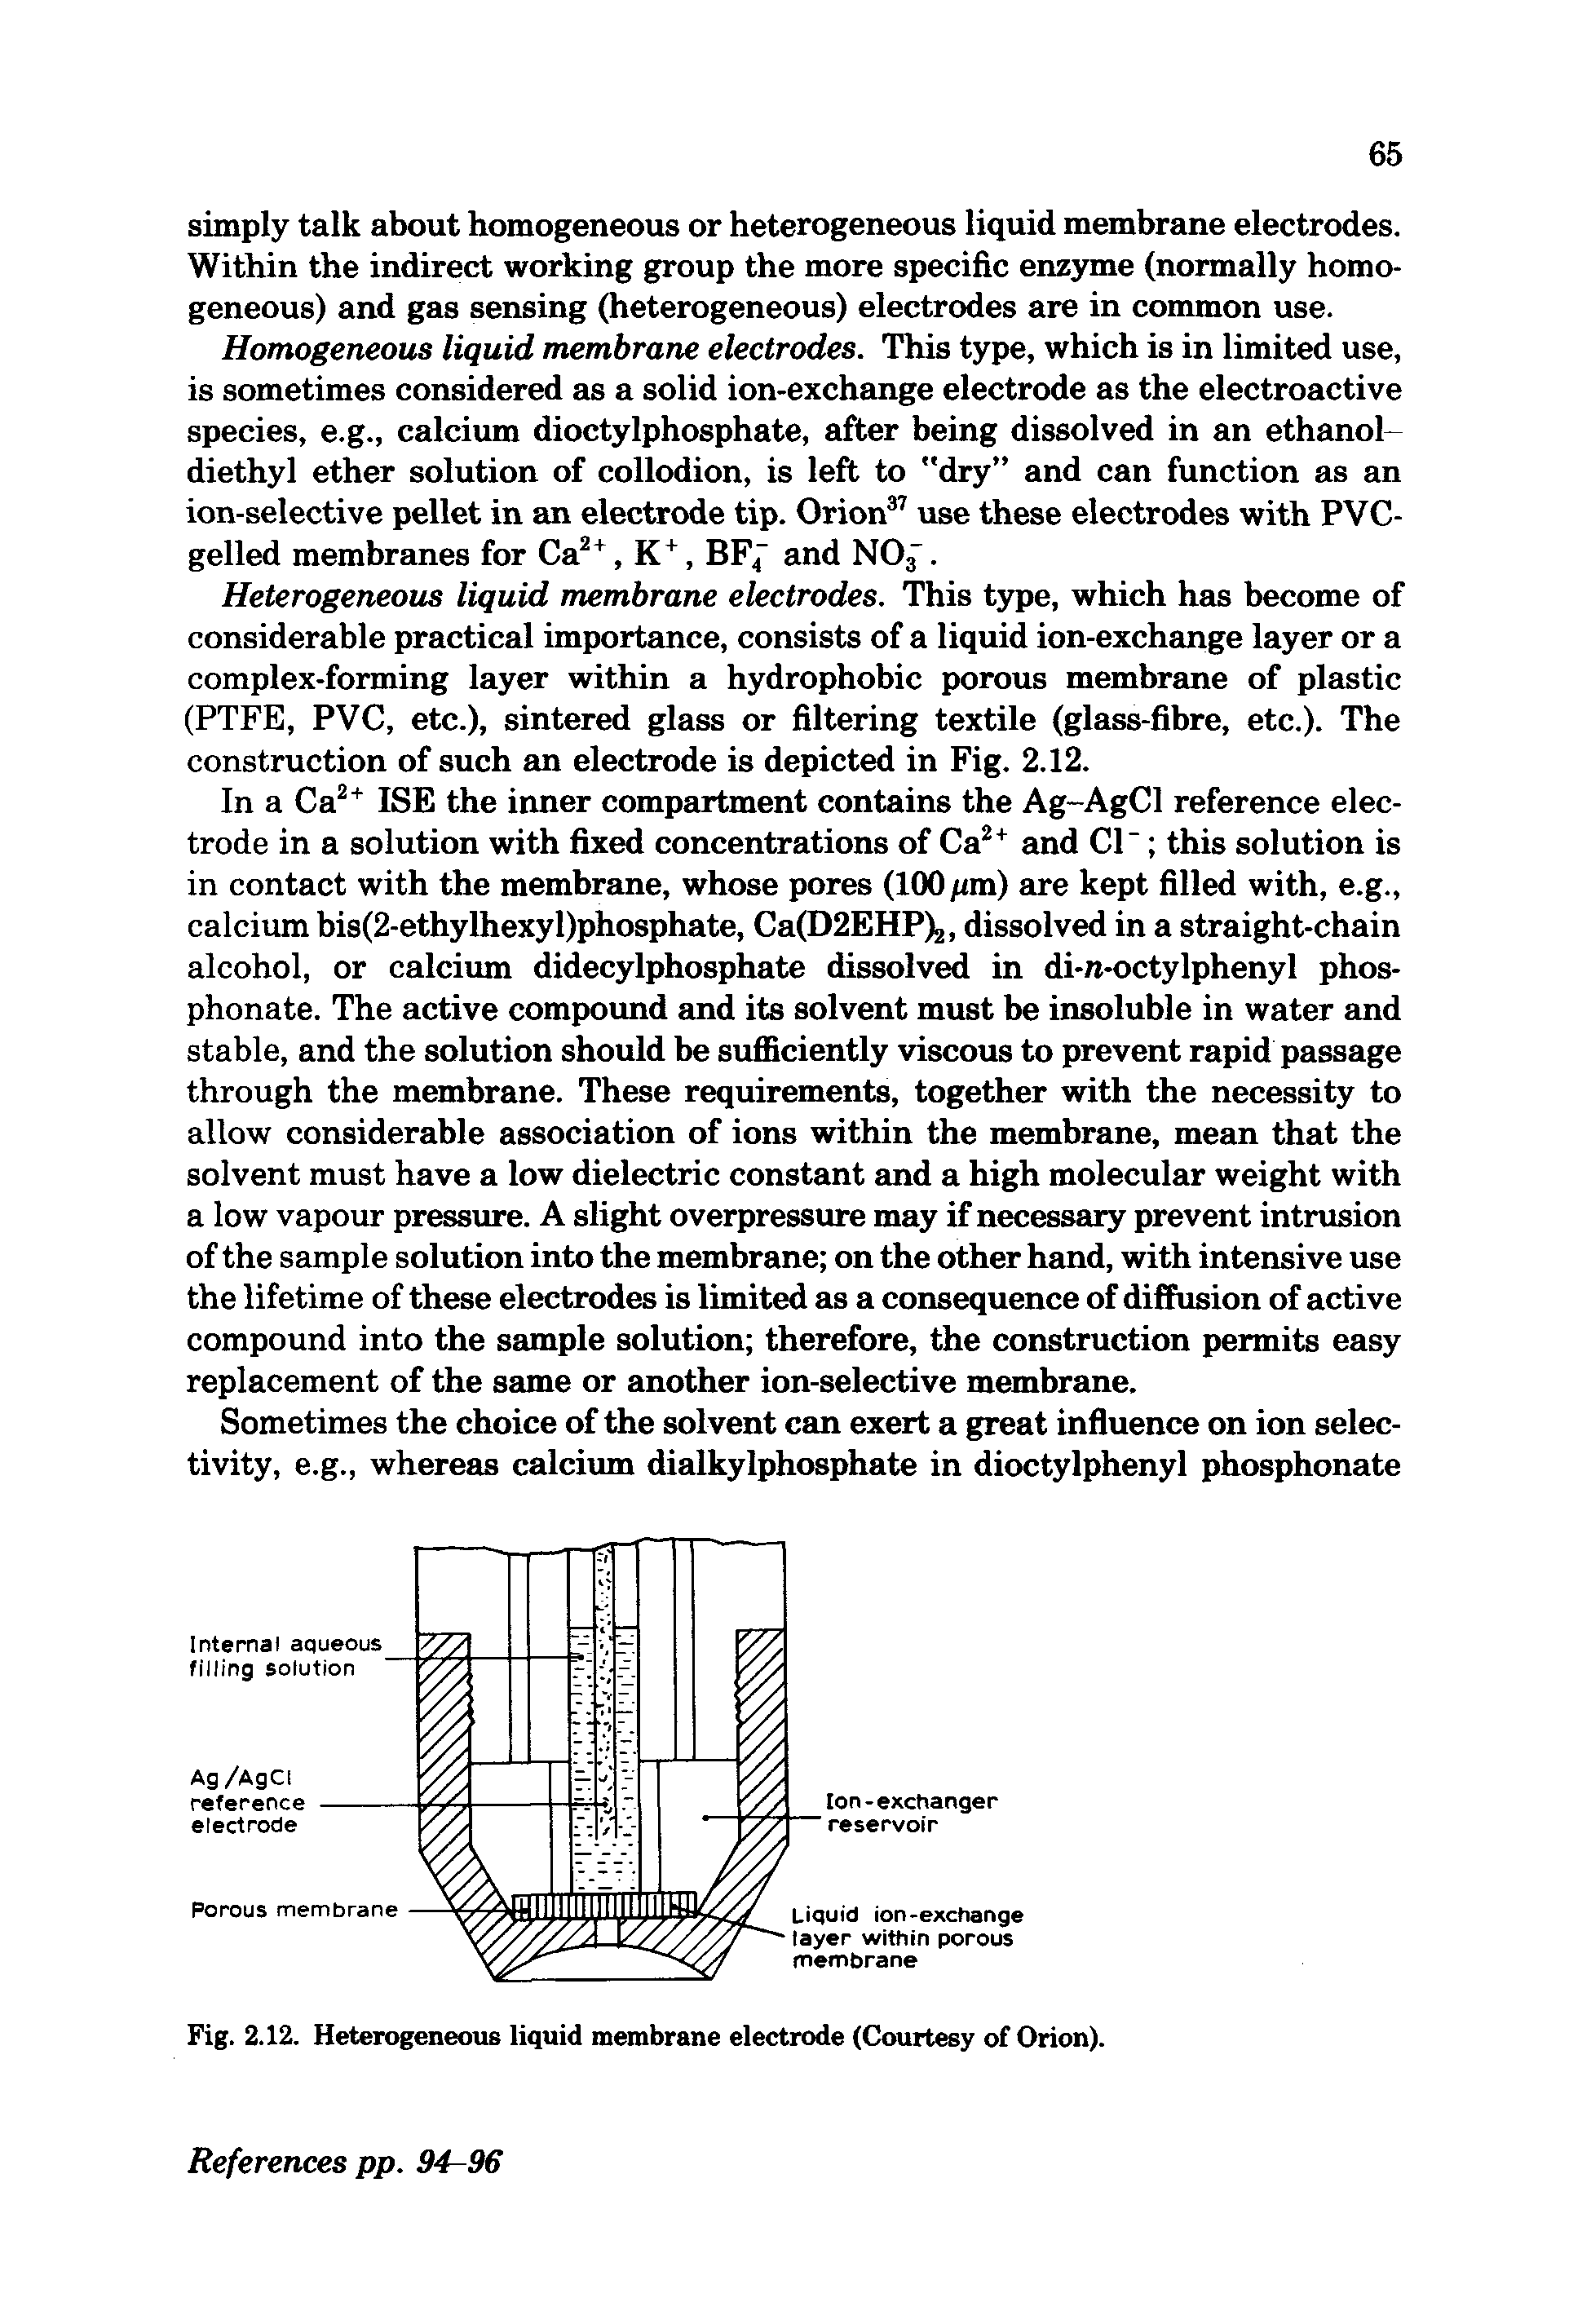 Fig. 2.12. Heterogeneous liquid membrane electrode (Courtesy of Orion).